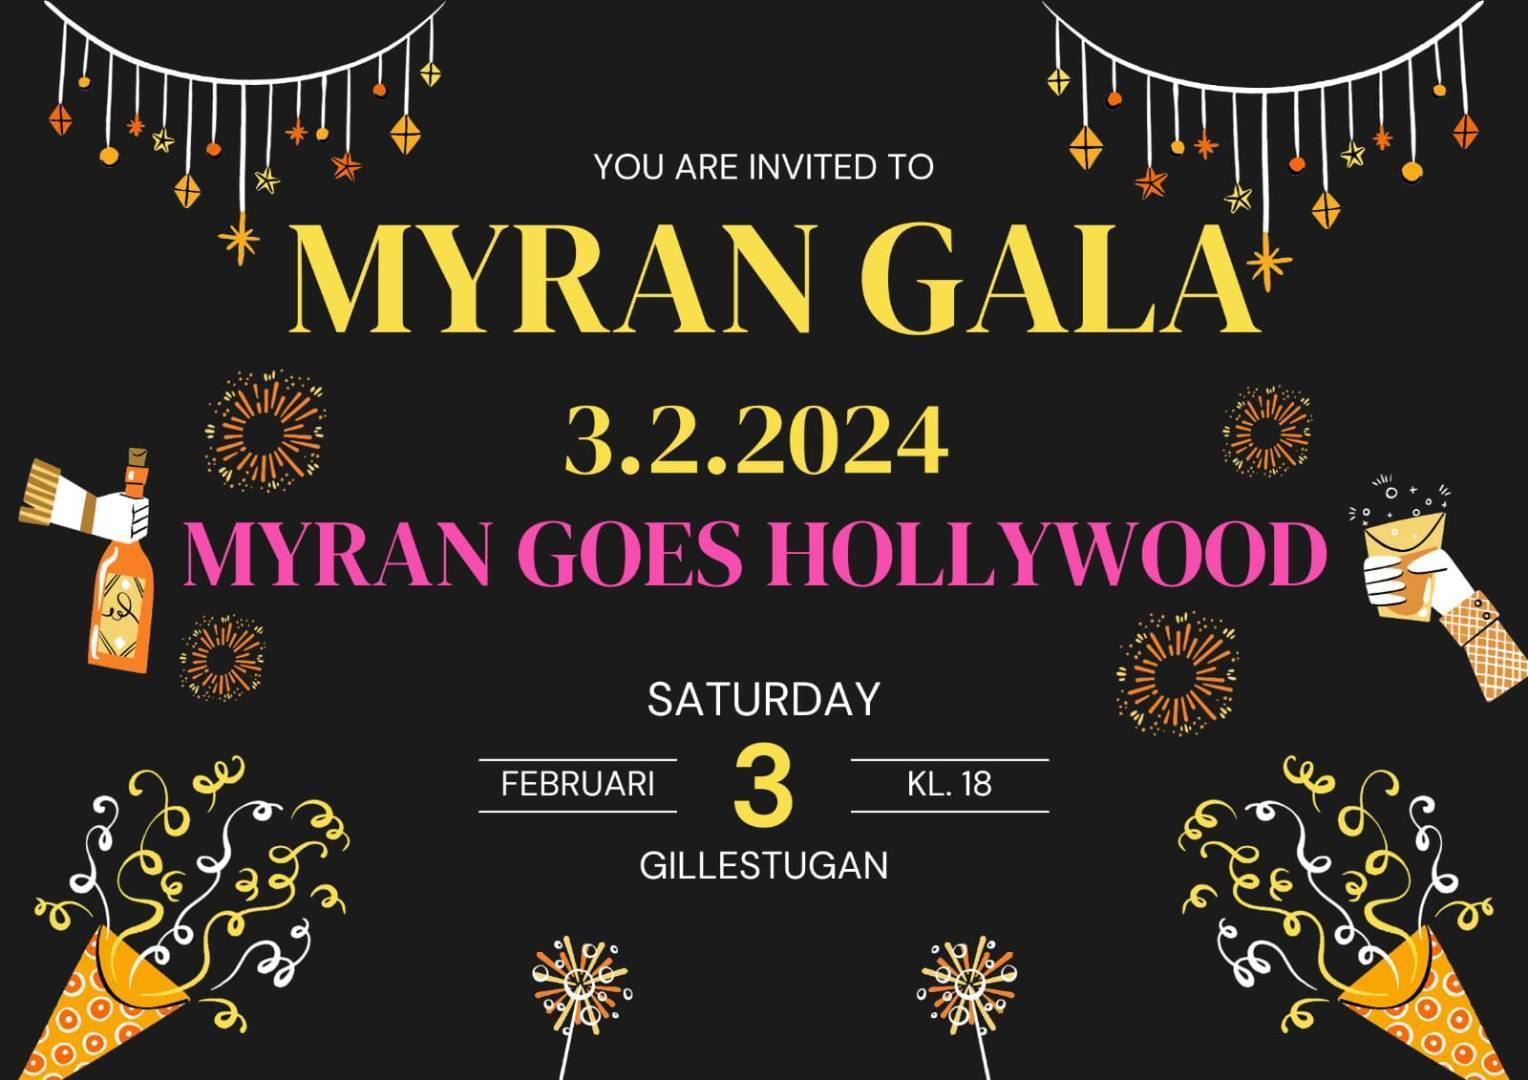 Myran Gala 2024